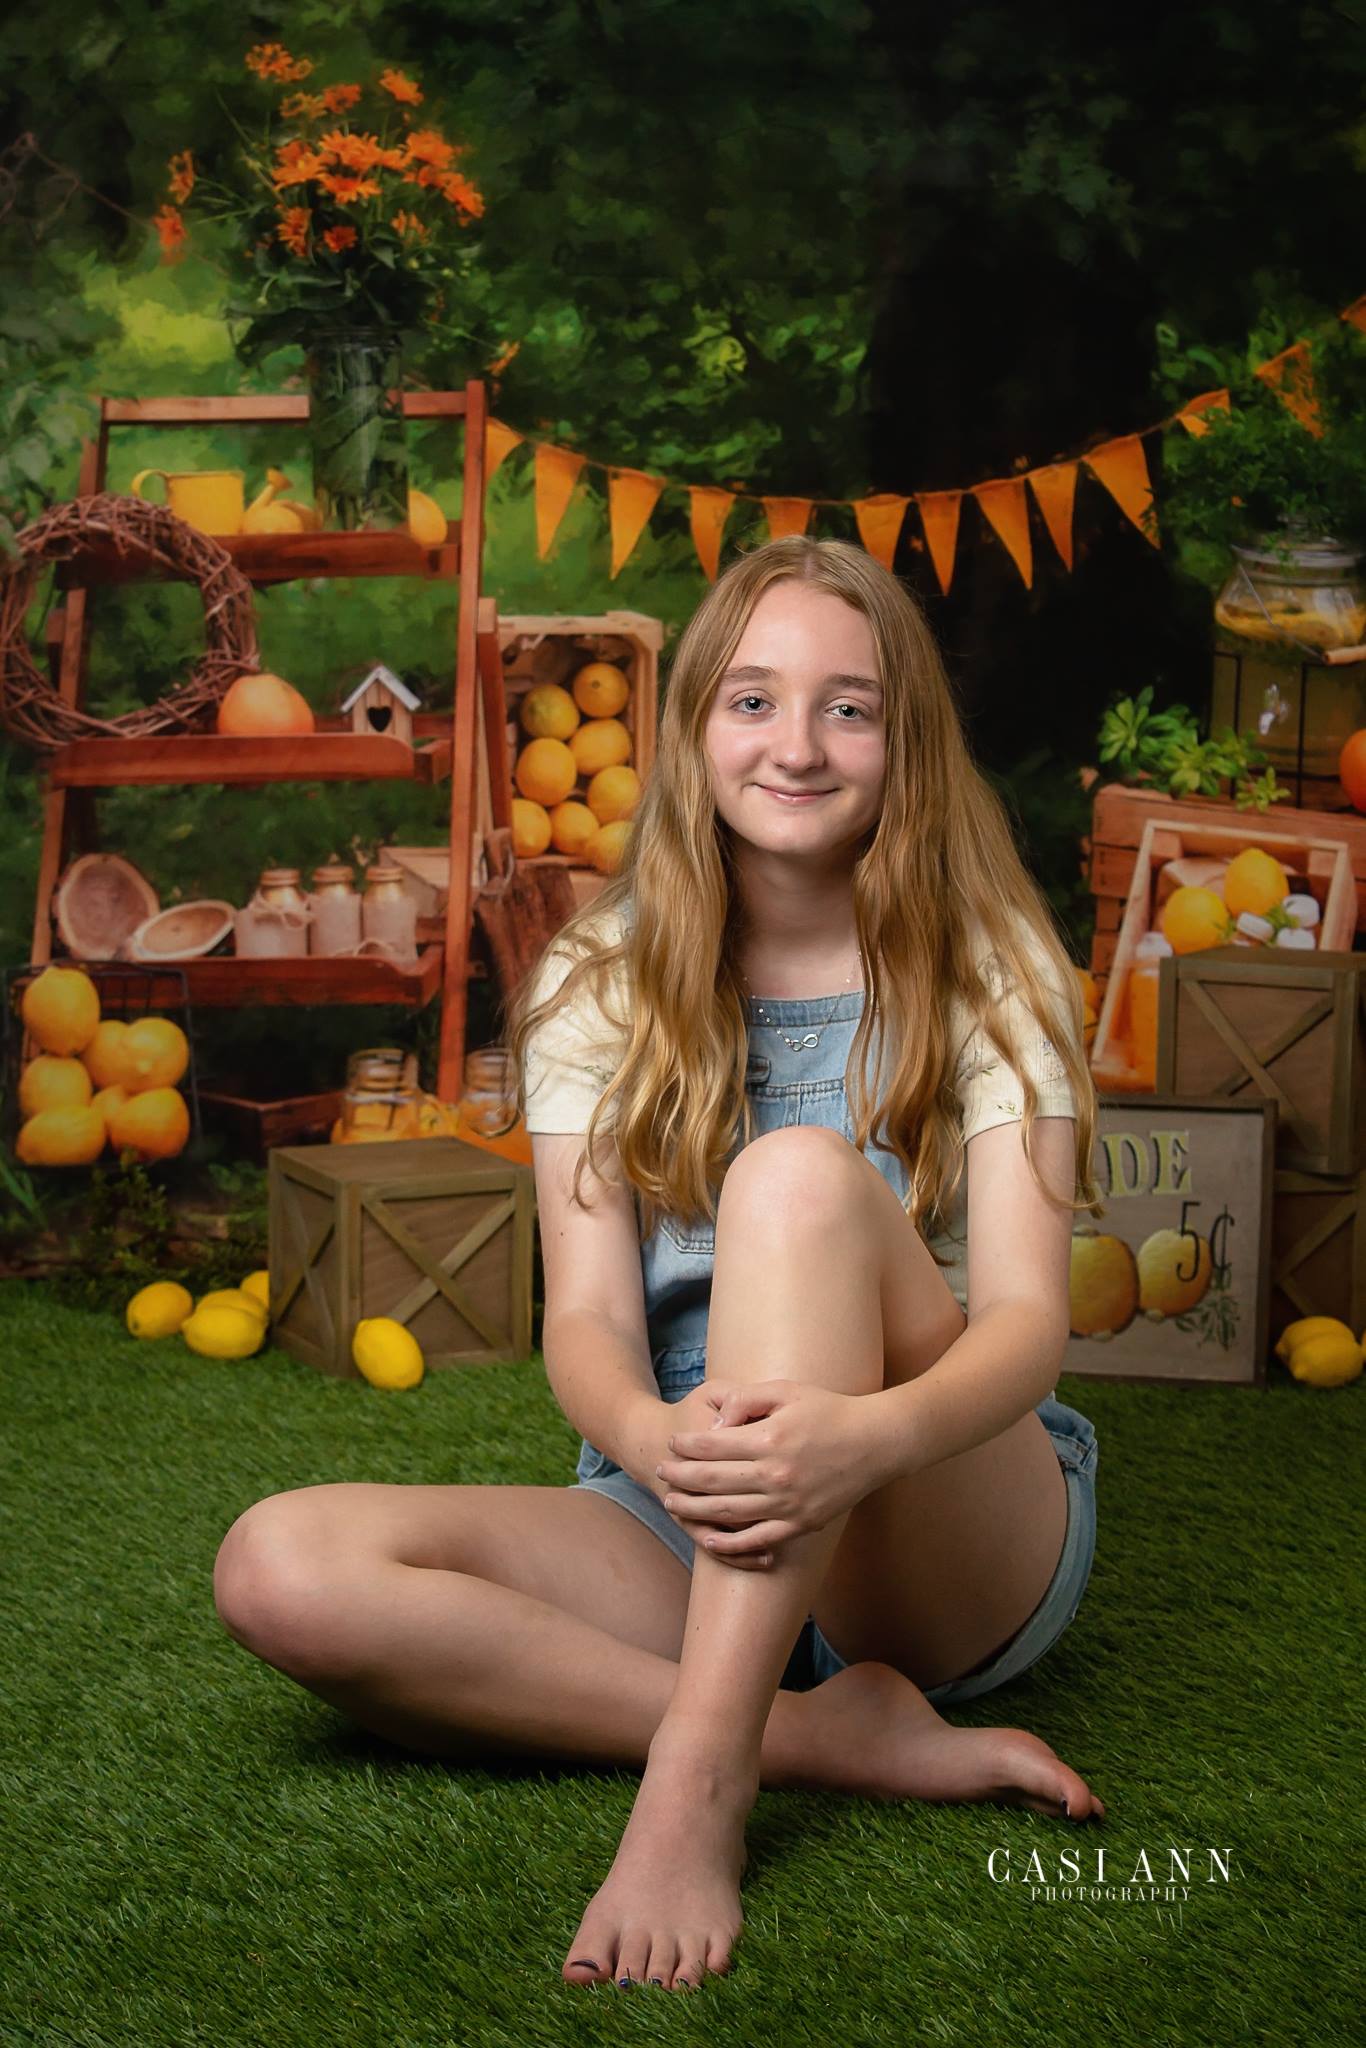 Kate Lemon Picnic Cake Smash Summer Backdrop for Photography